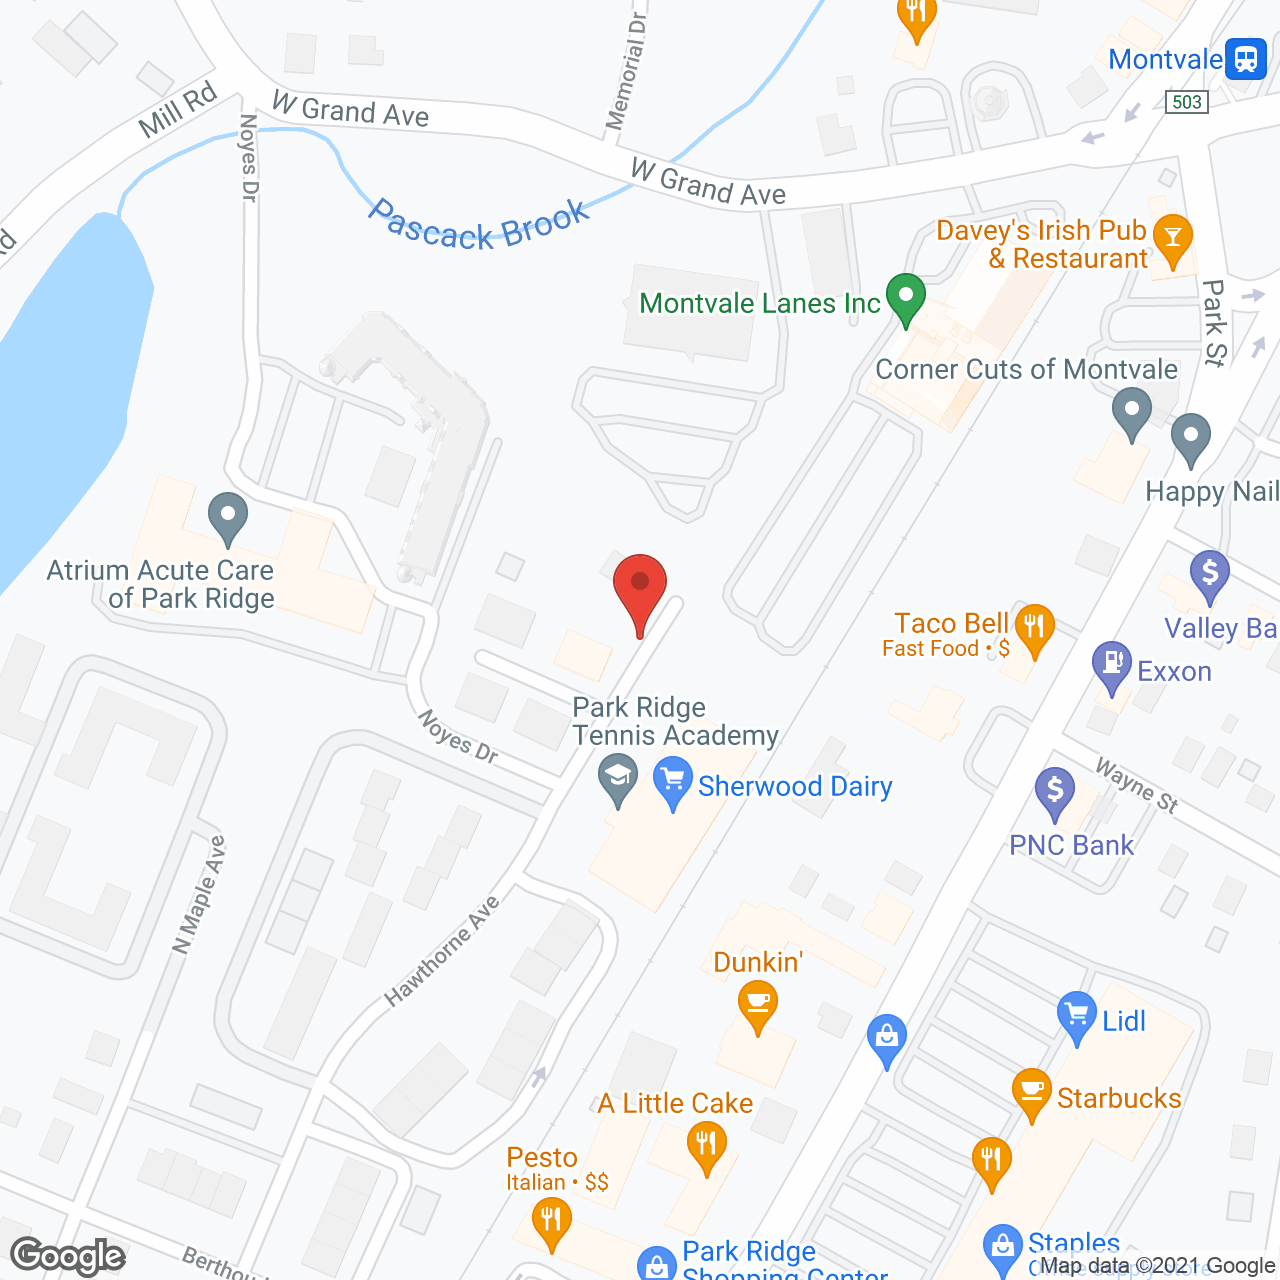 Residence at Park Ridge in google map